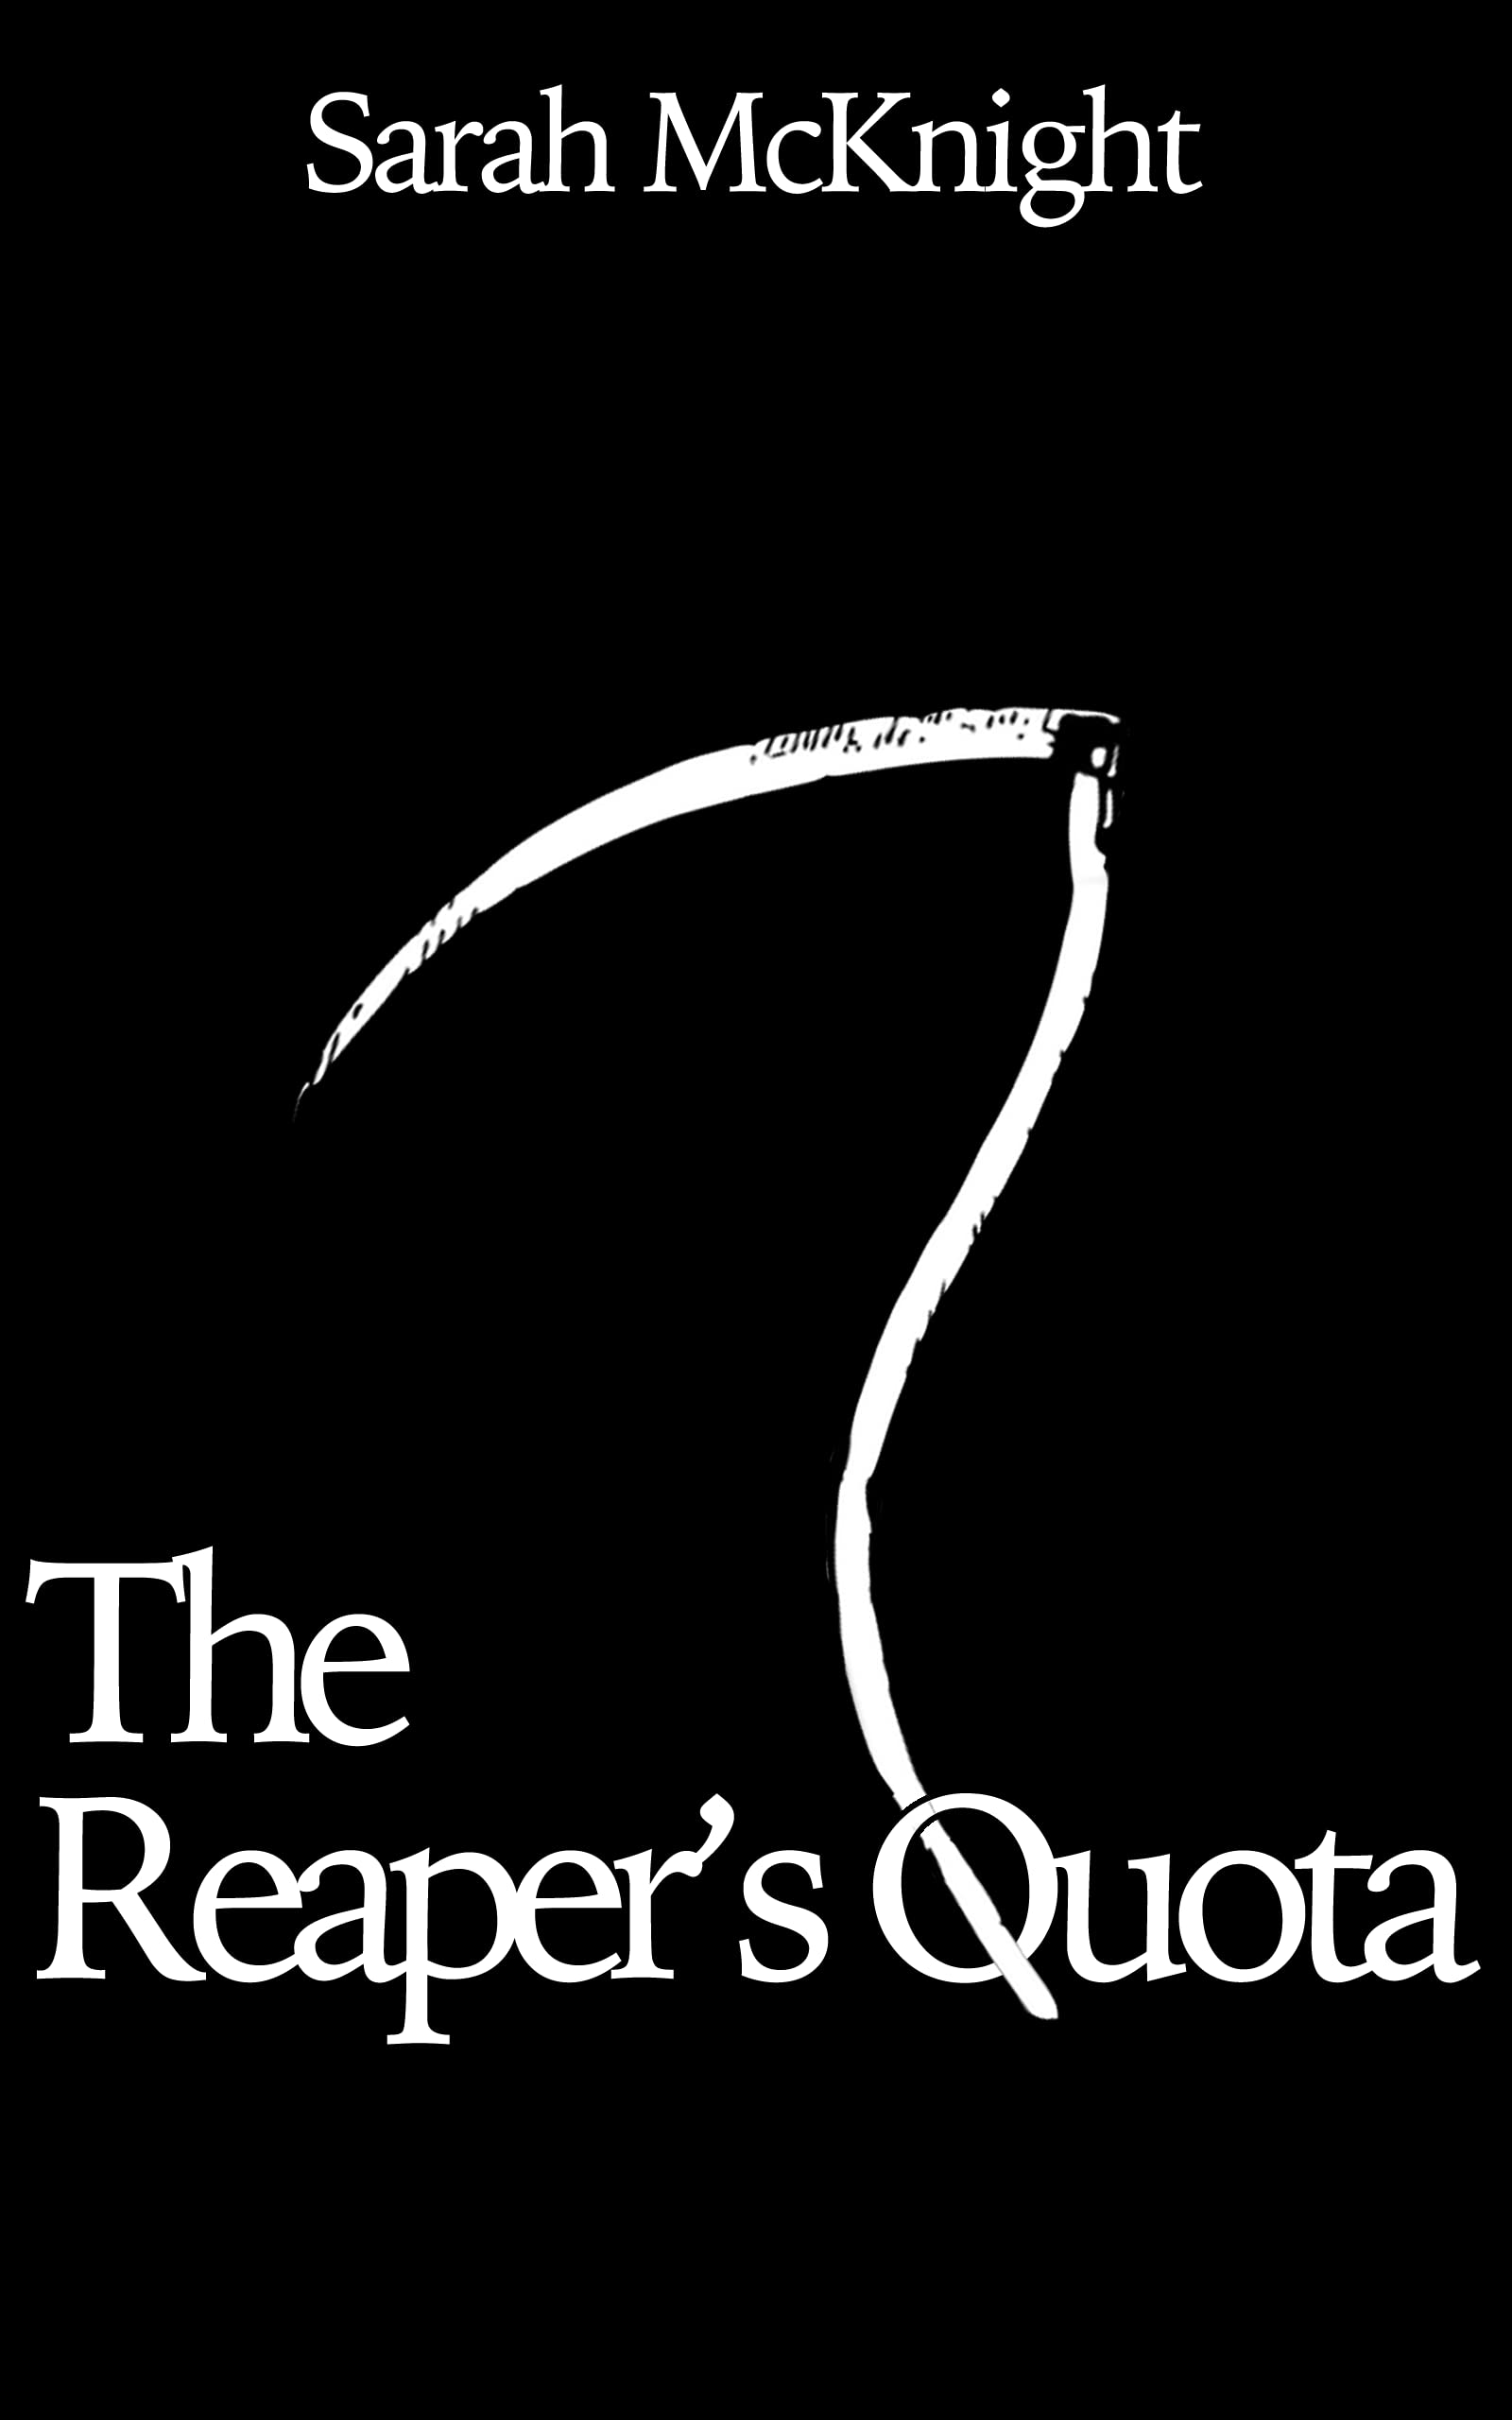 The Reaper's Quota by Sarah McKnight